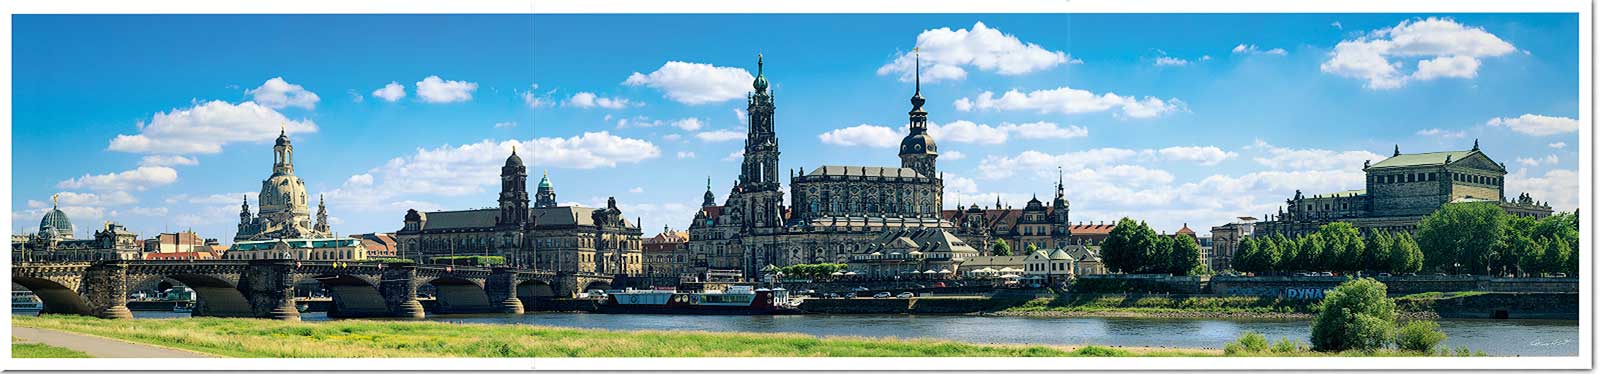 Panorama-Faltpostkarte Dresden Hans Fineart